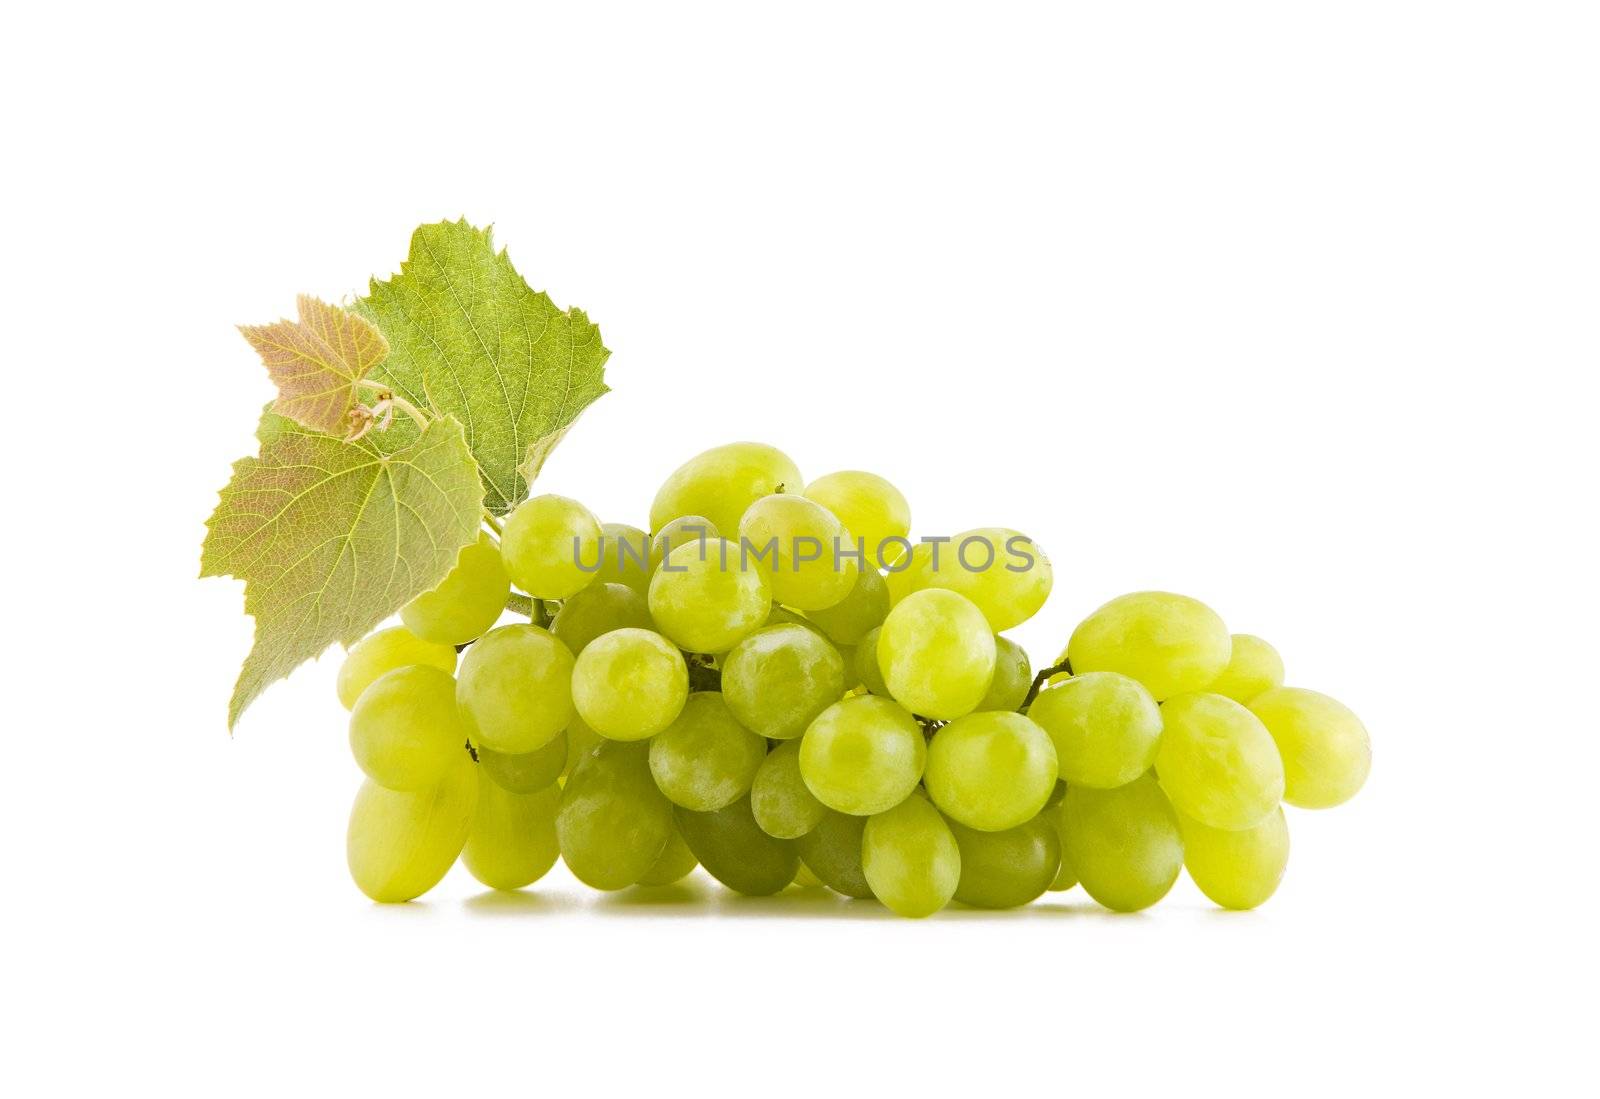 Grape fruits by Gbuglok